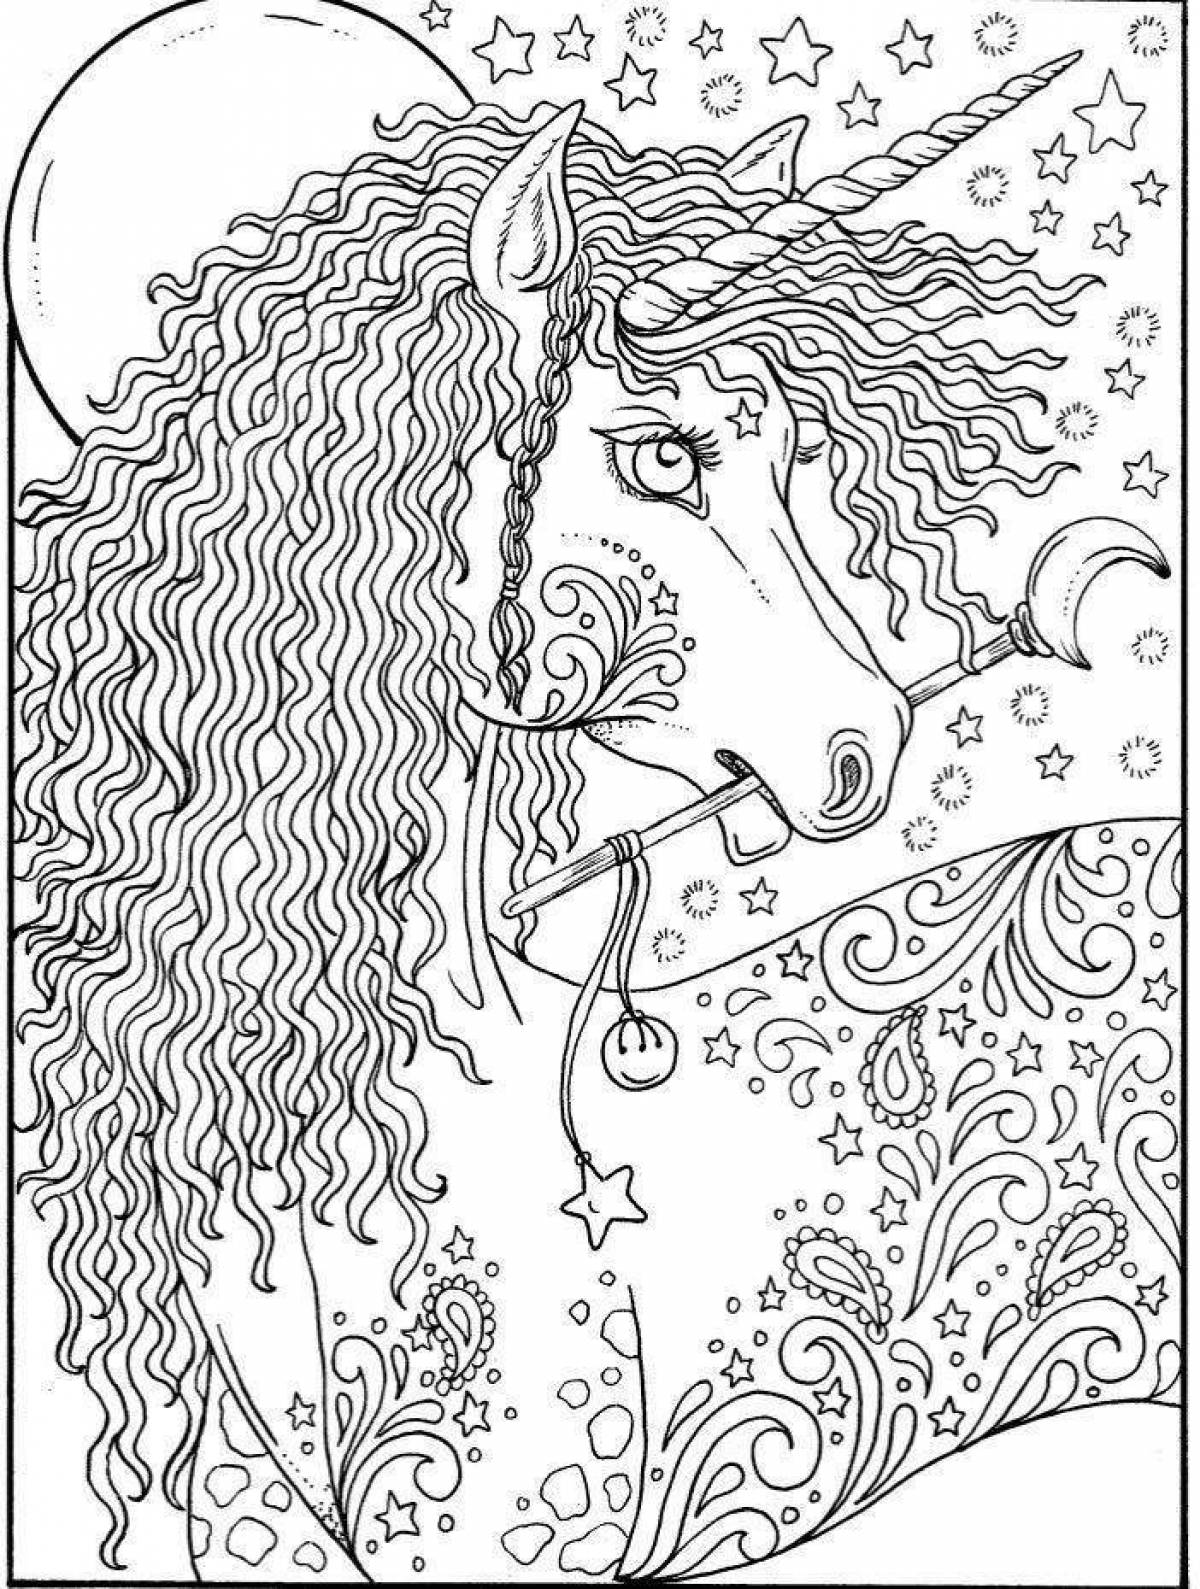 Exquisite antistress unicorn coloring book